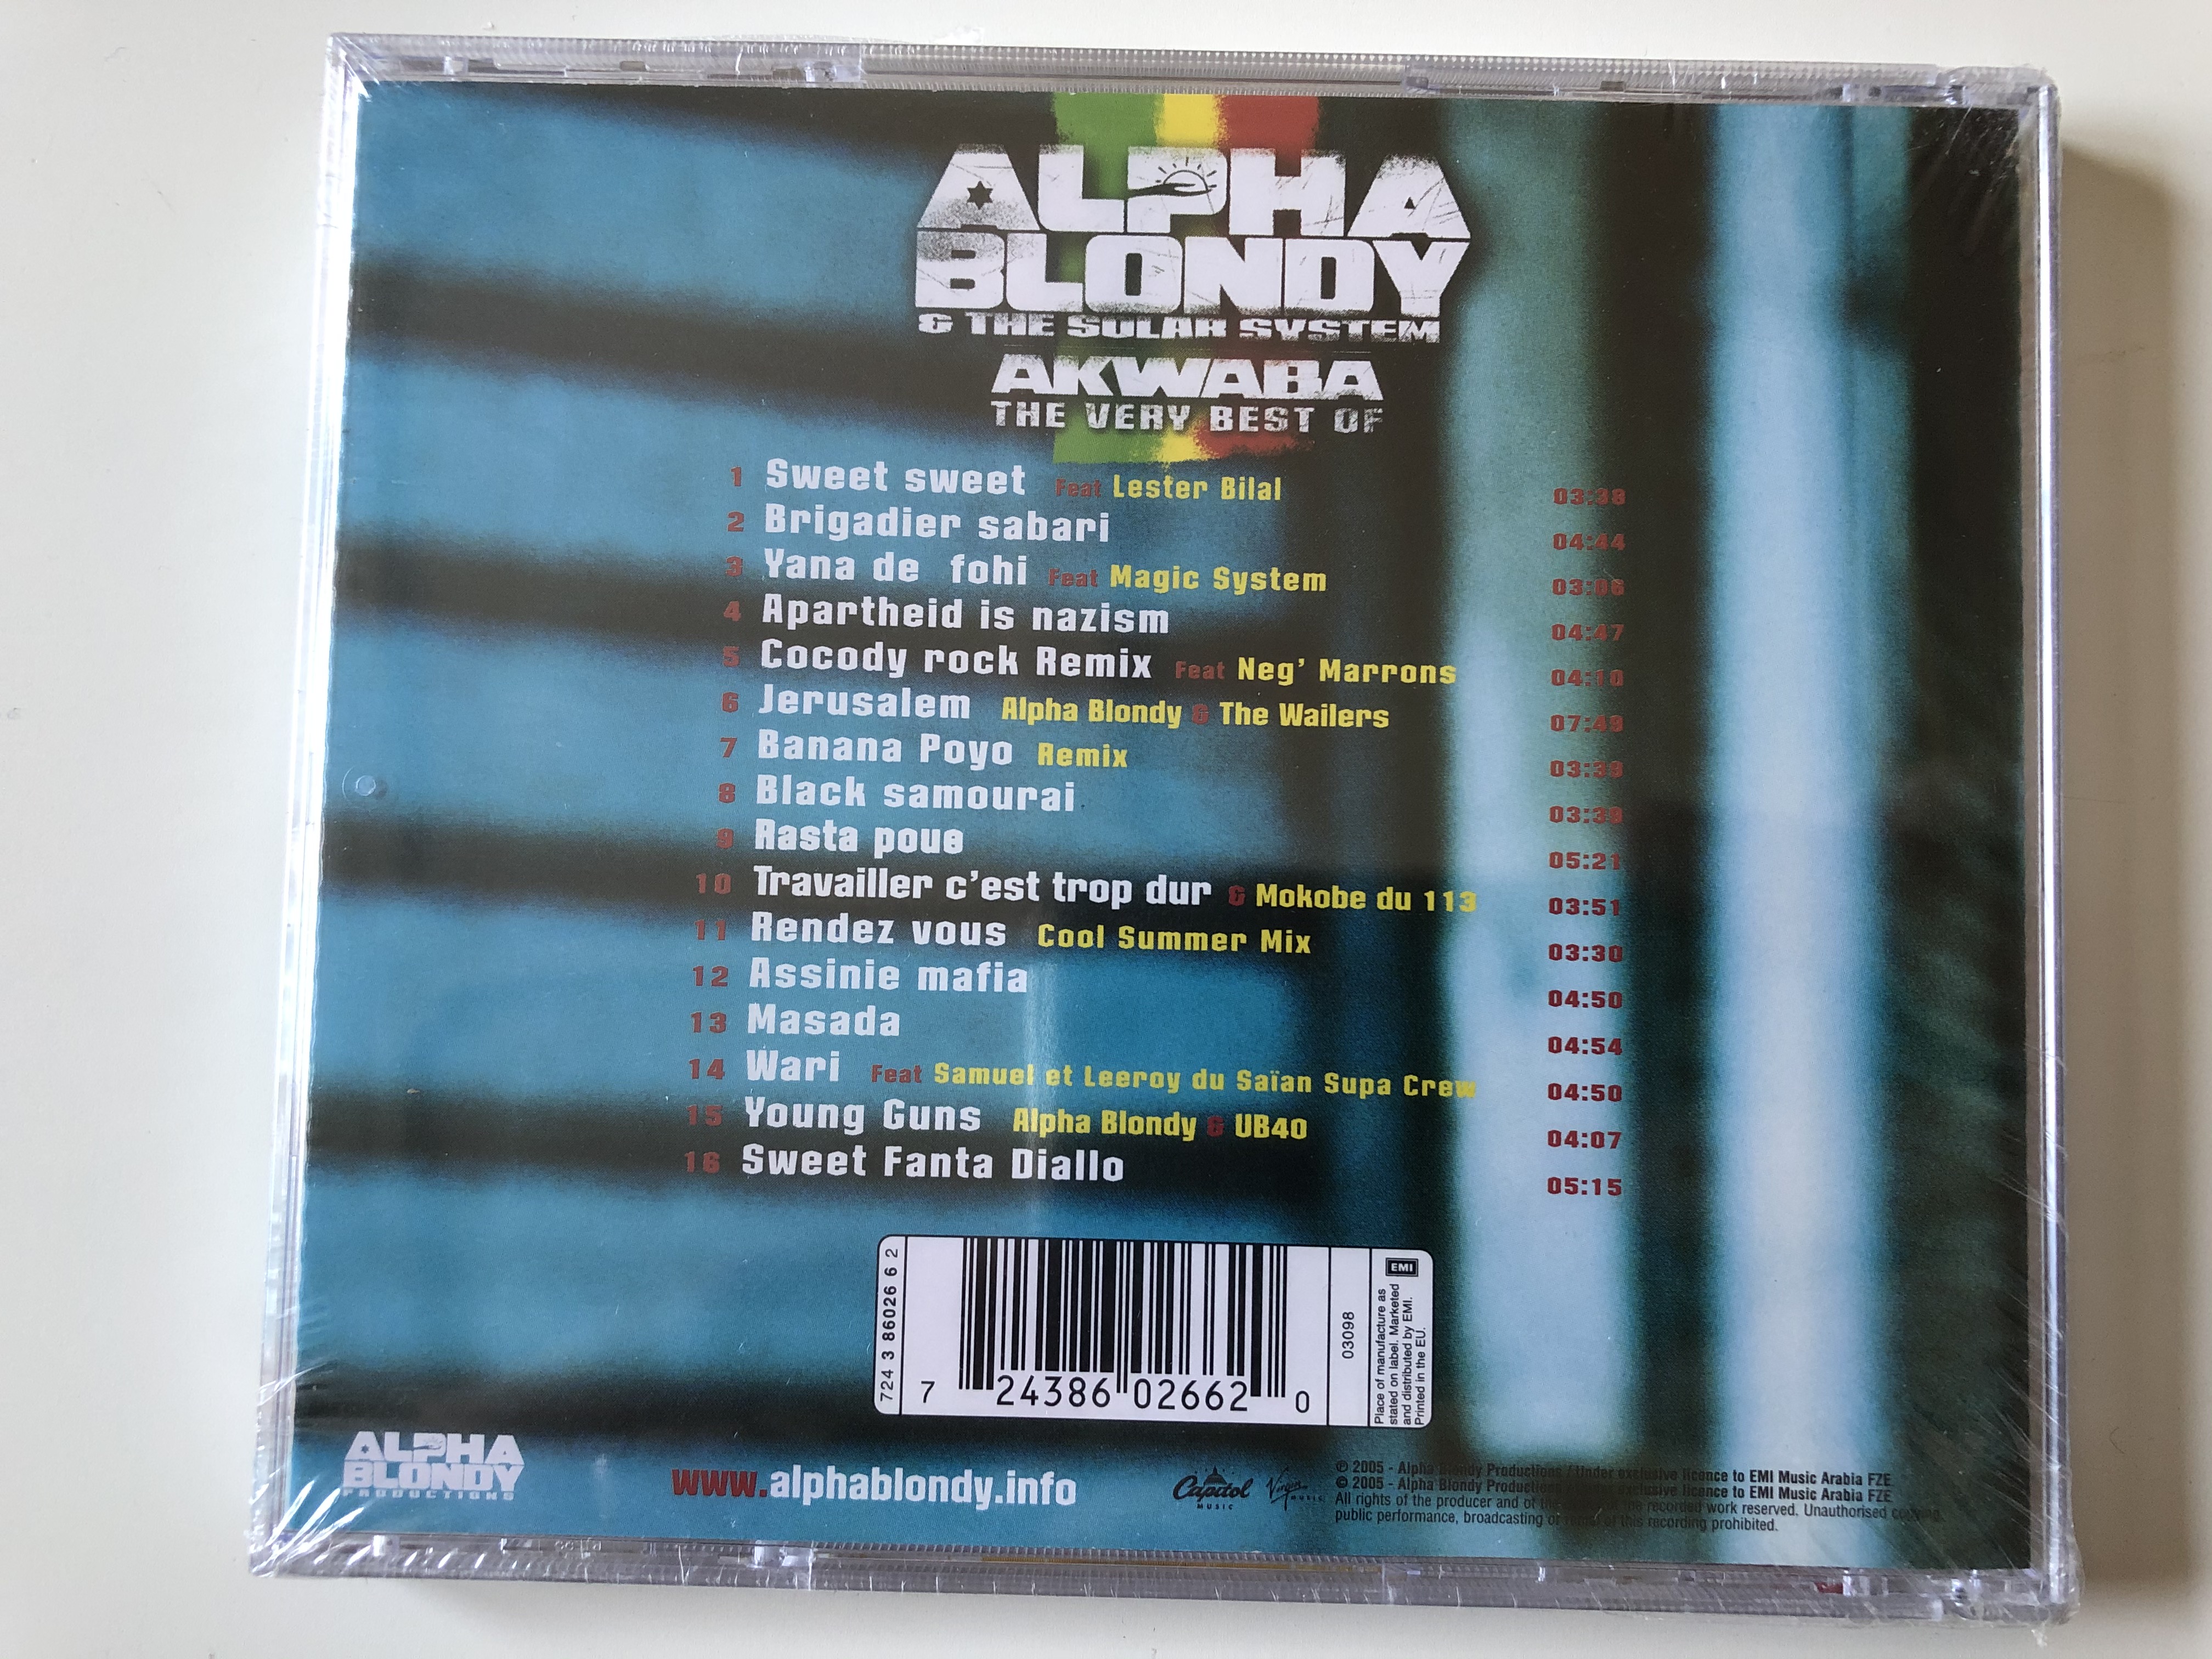 alpha-blondy-the-solah-system-akwaba-the-very-best-of-emi-audio-cd-2005-724-3-86026-6-2-2-.jpg